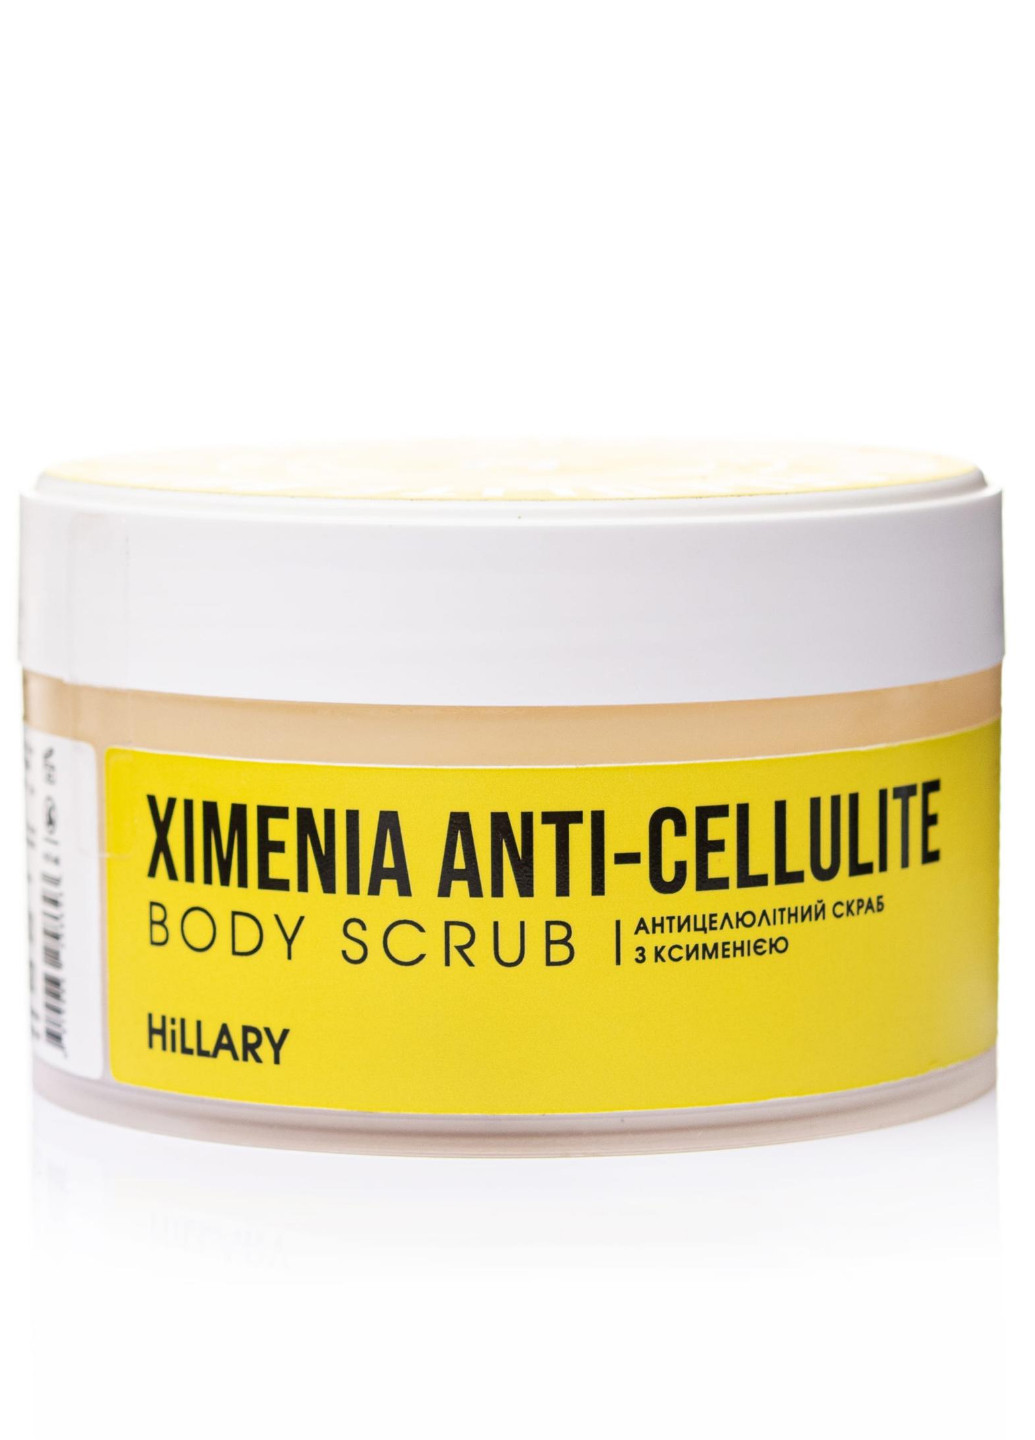 Антицеллюлитный скраб с ксимениею Хimenia Anti-cellulite Body Scrub, 200 г Hillary (254015496)